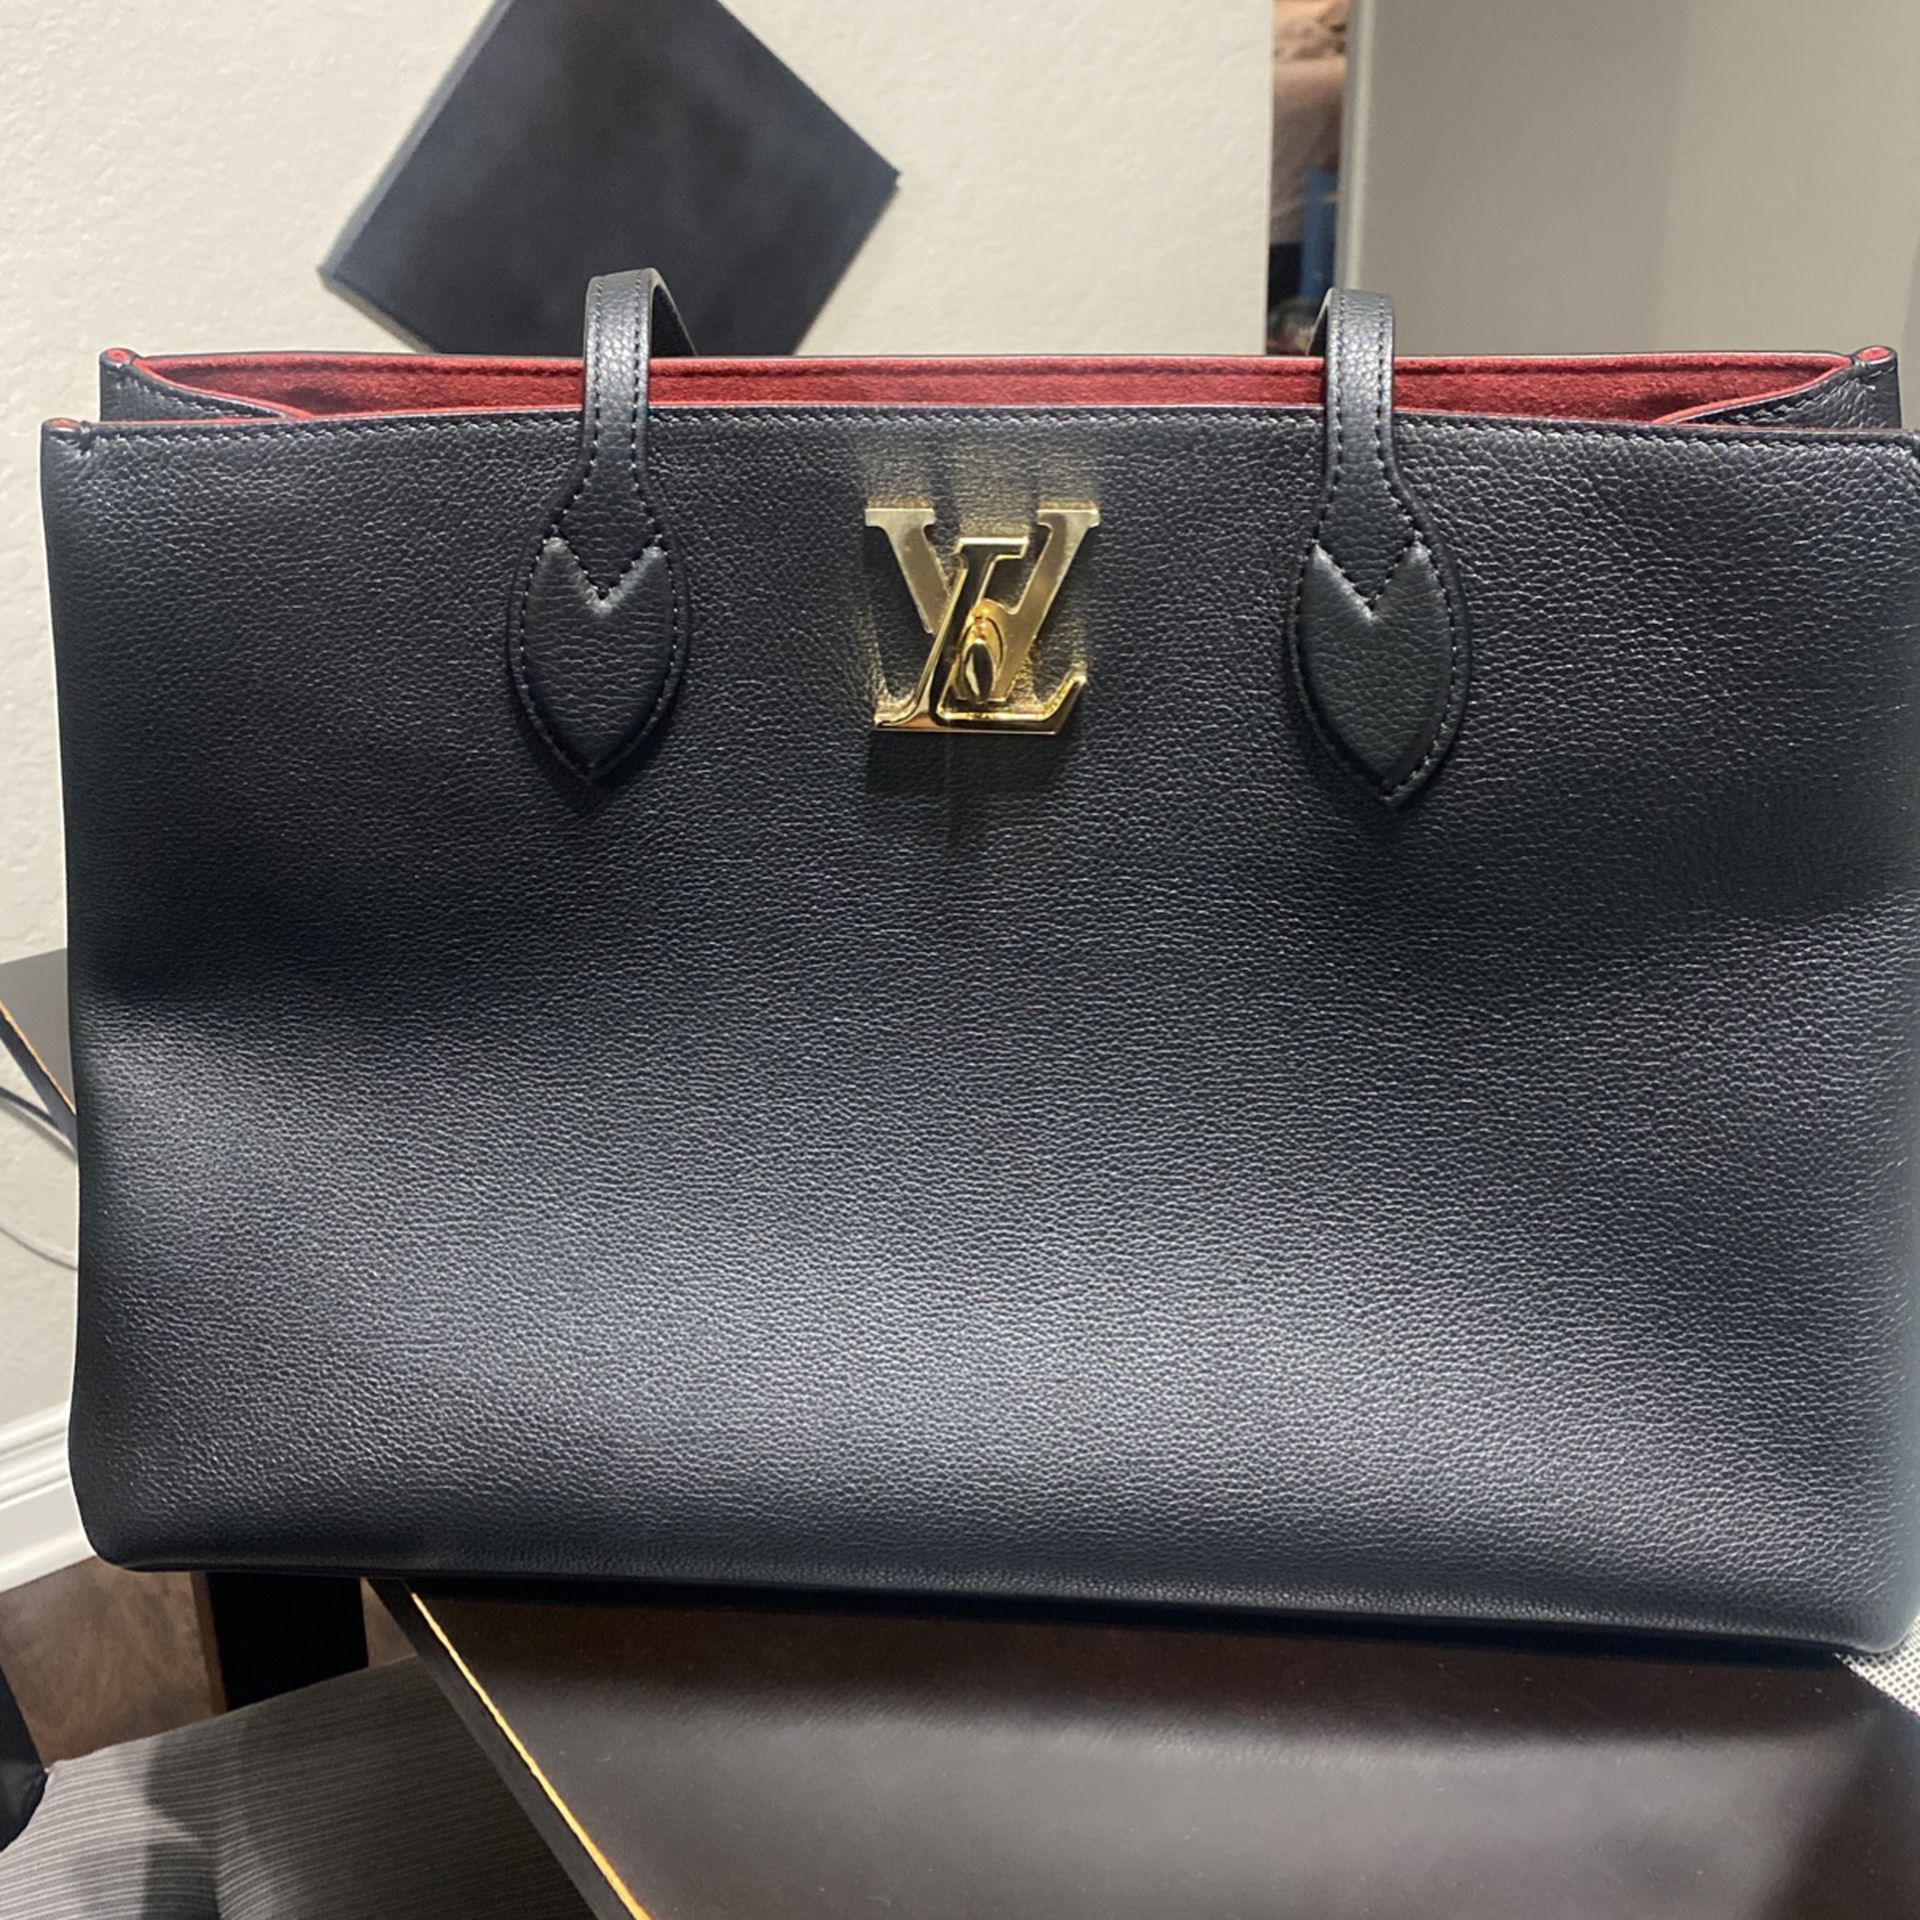 Bags, Louis Vuitton Lockme Shopper Tote